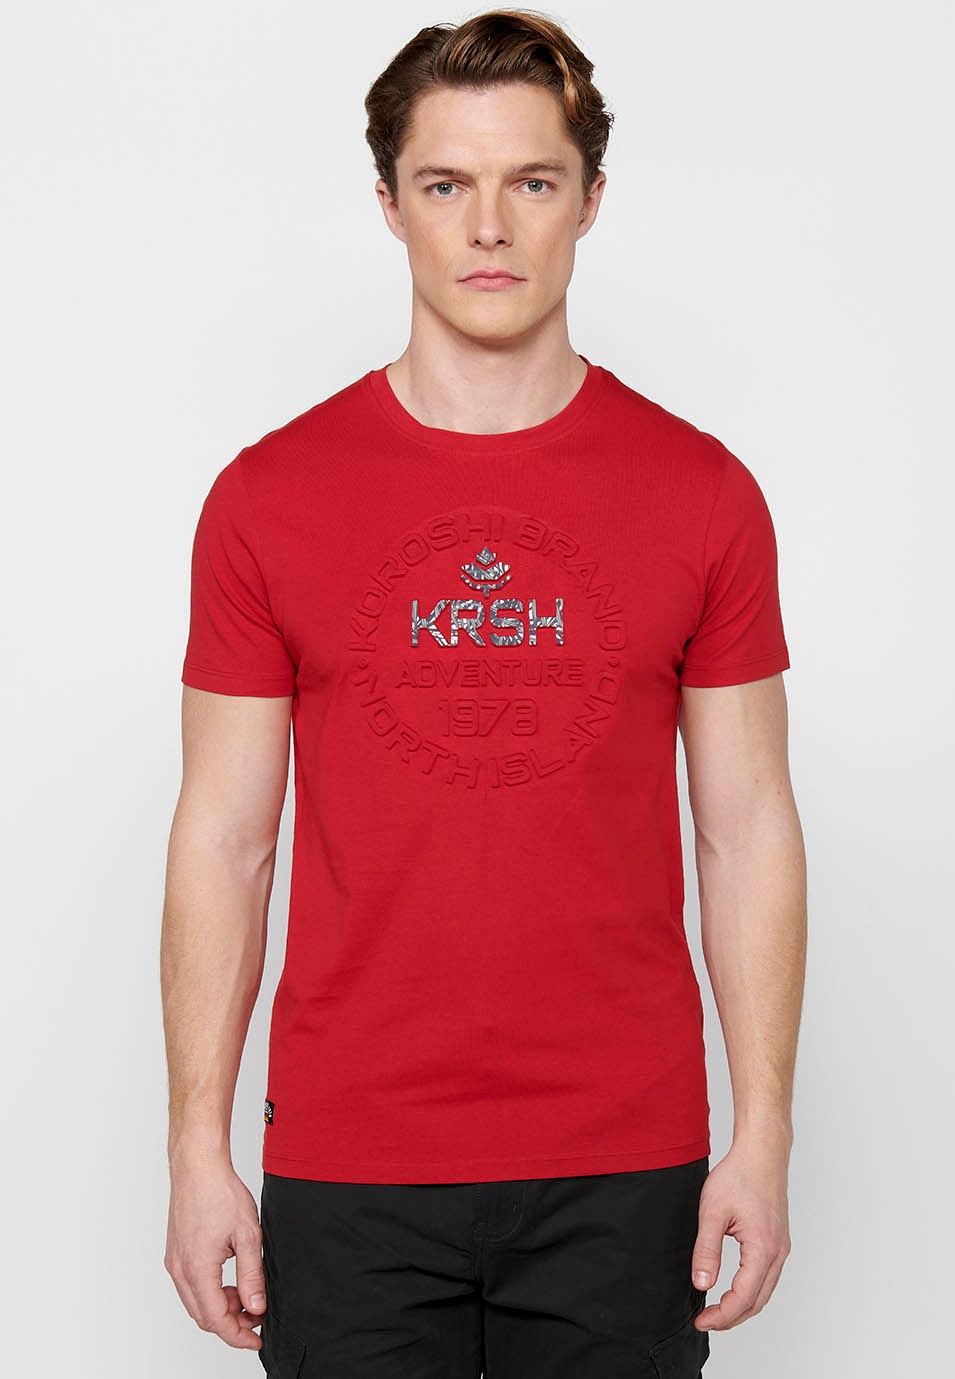 Men's Red Color Round Neck Cotton Short Sleeve T-shirt